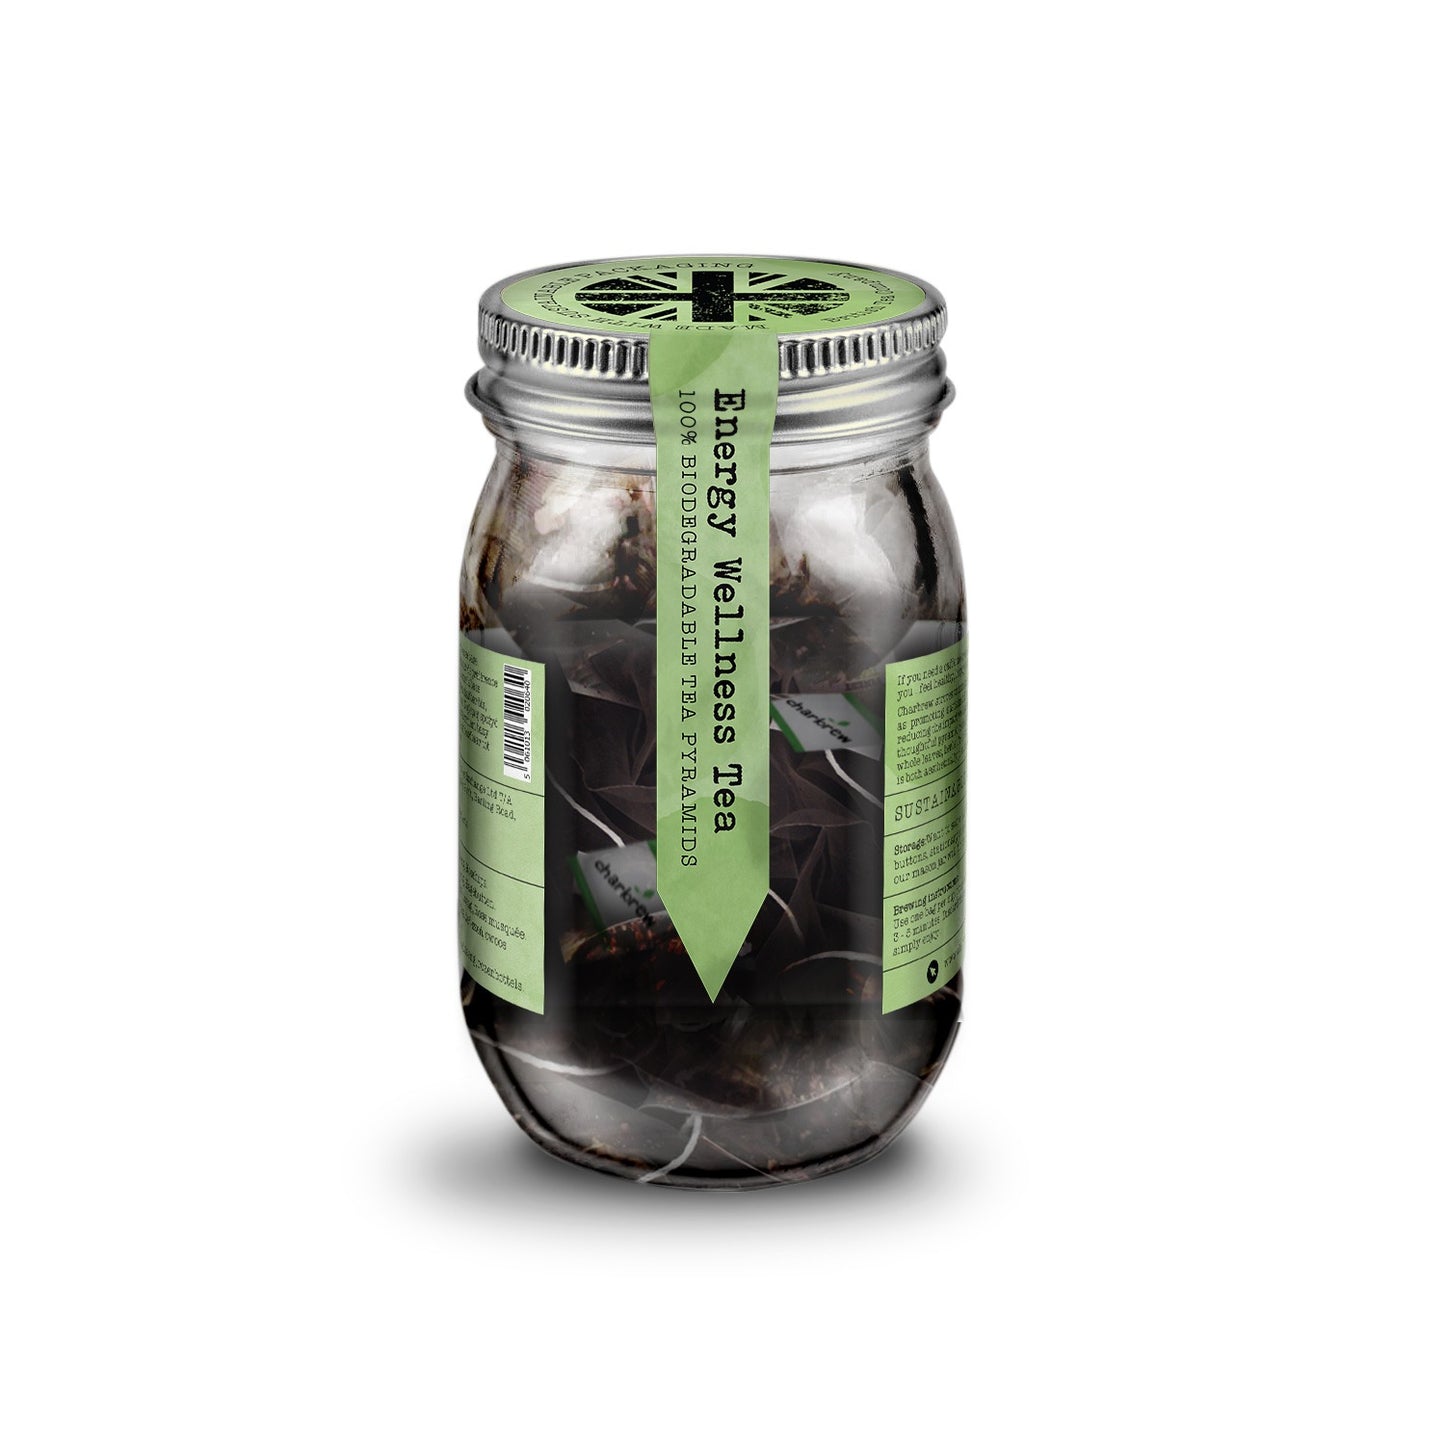 Energy Wellness Tea Bags Mason Jar - 16 Biodegradable Pyramid Bags